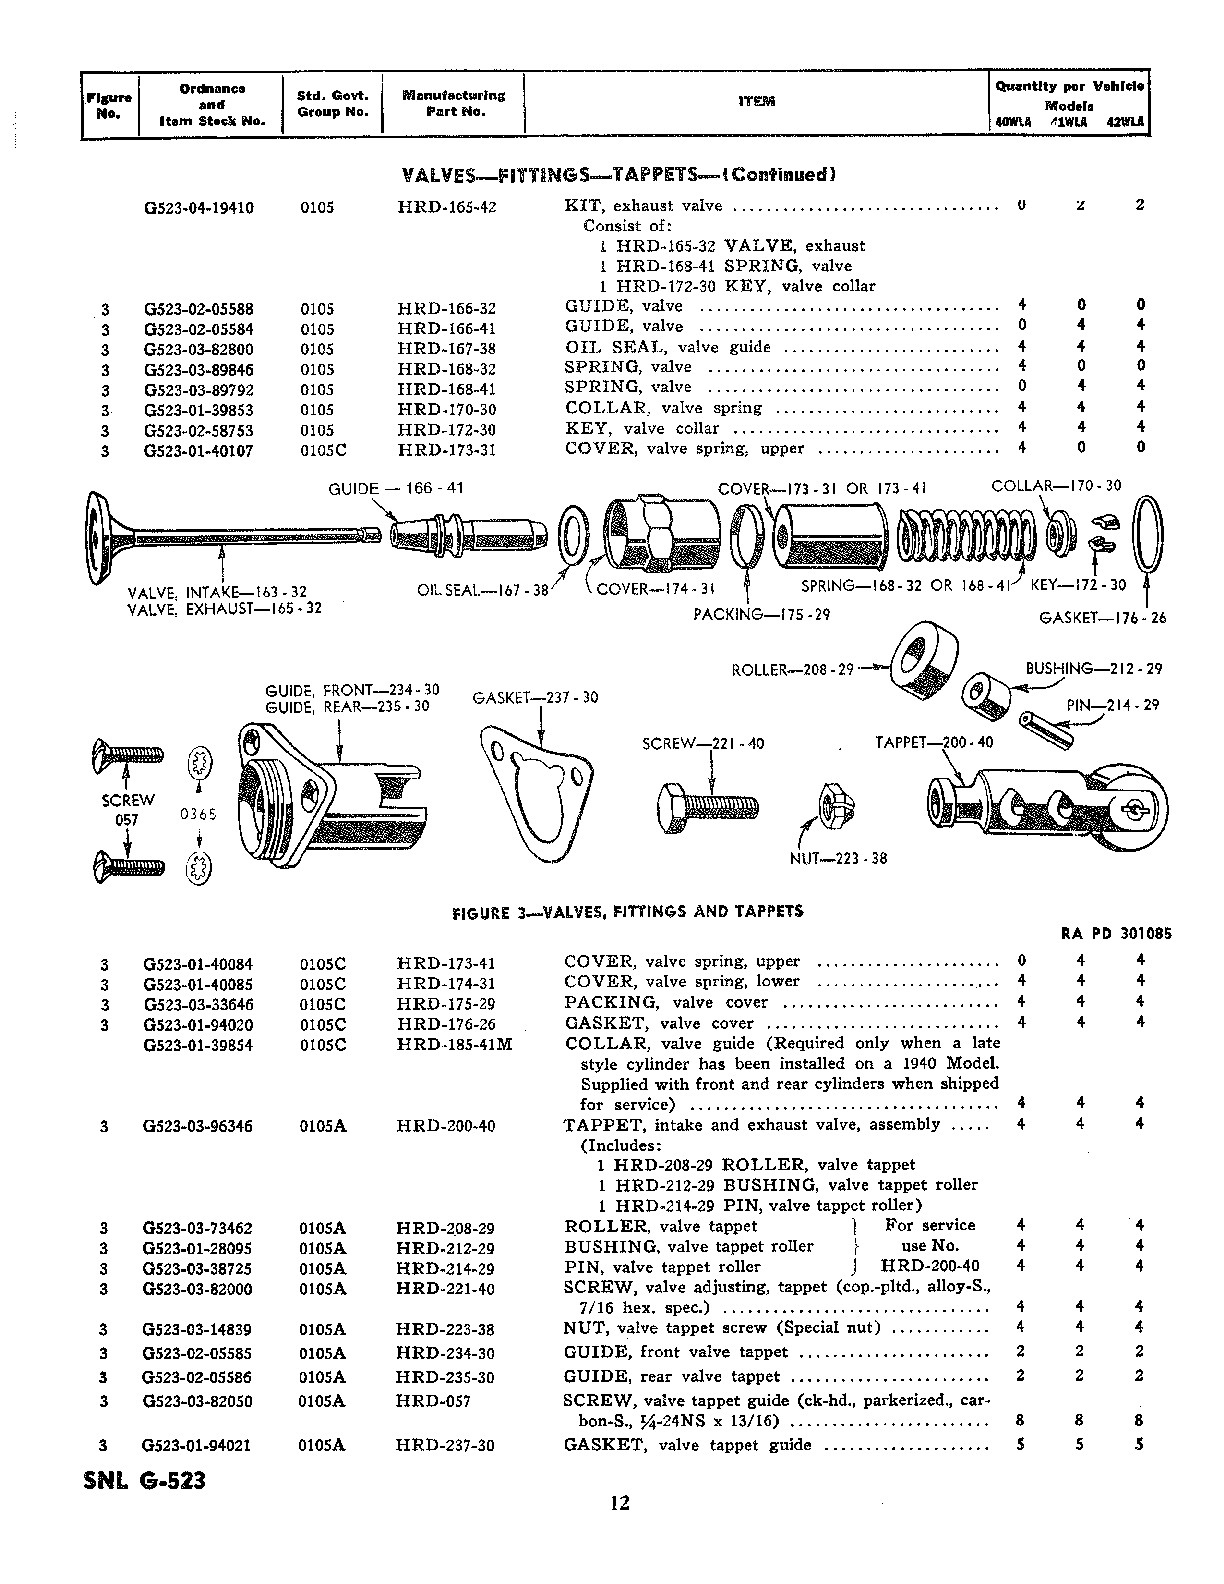 1943 - Harley-Davidson SNL G-523 Service parts catalog